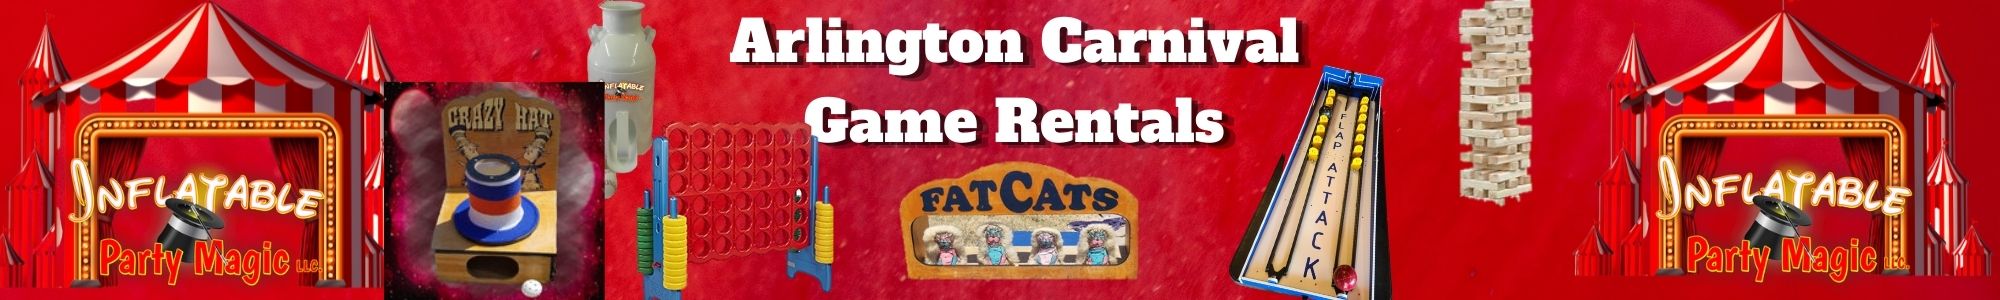 Arlington Carnival Game and Giant Backyard Game Rentals